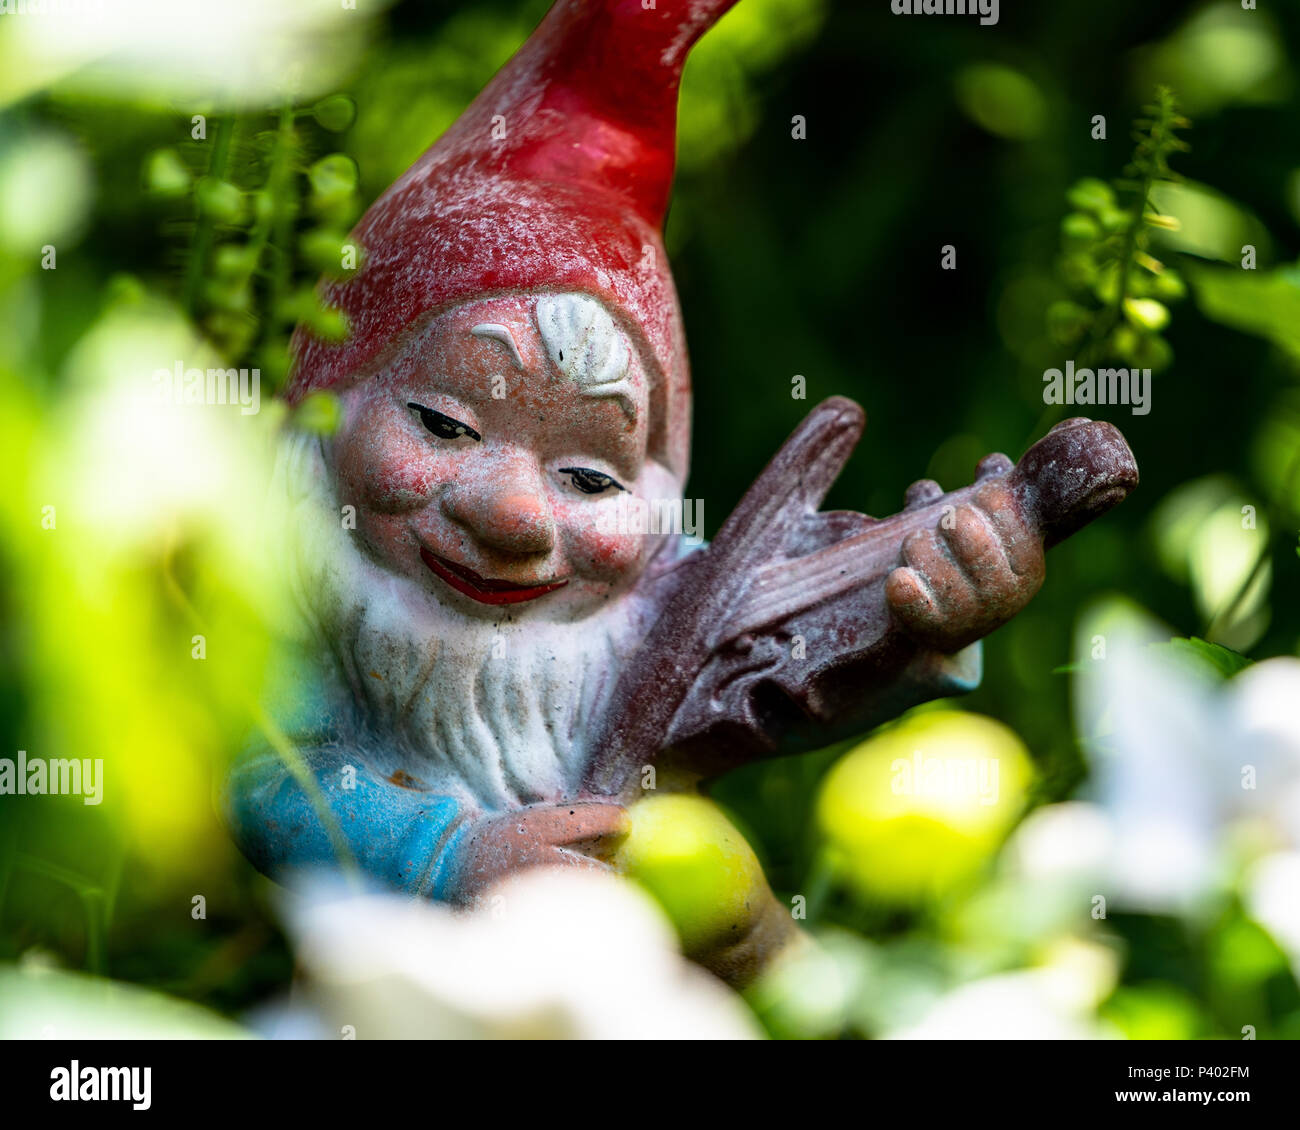 Smurf in a garden Stock Photo